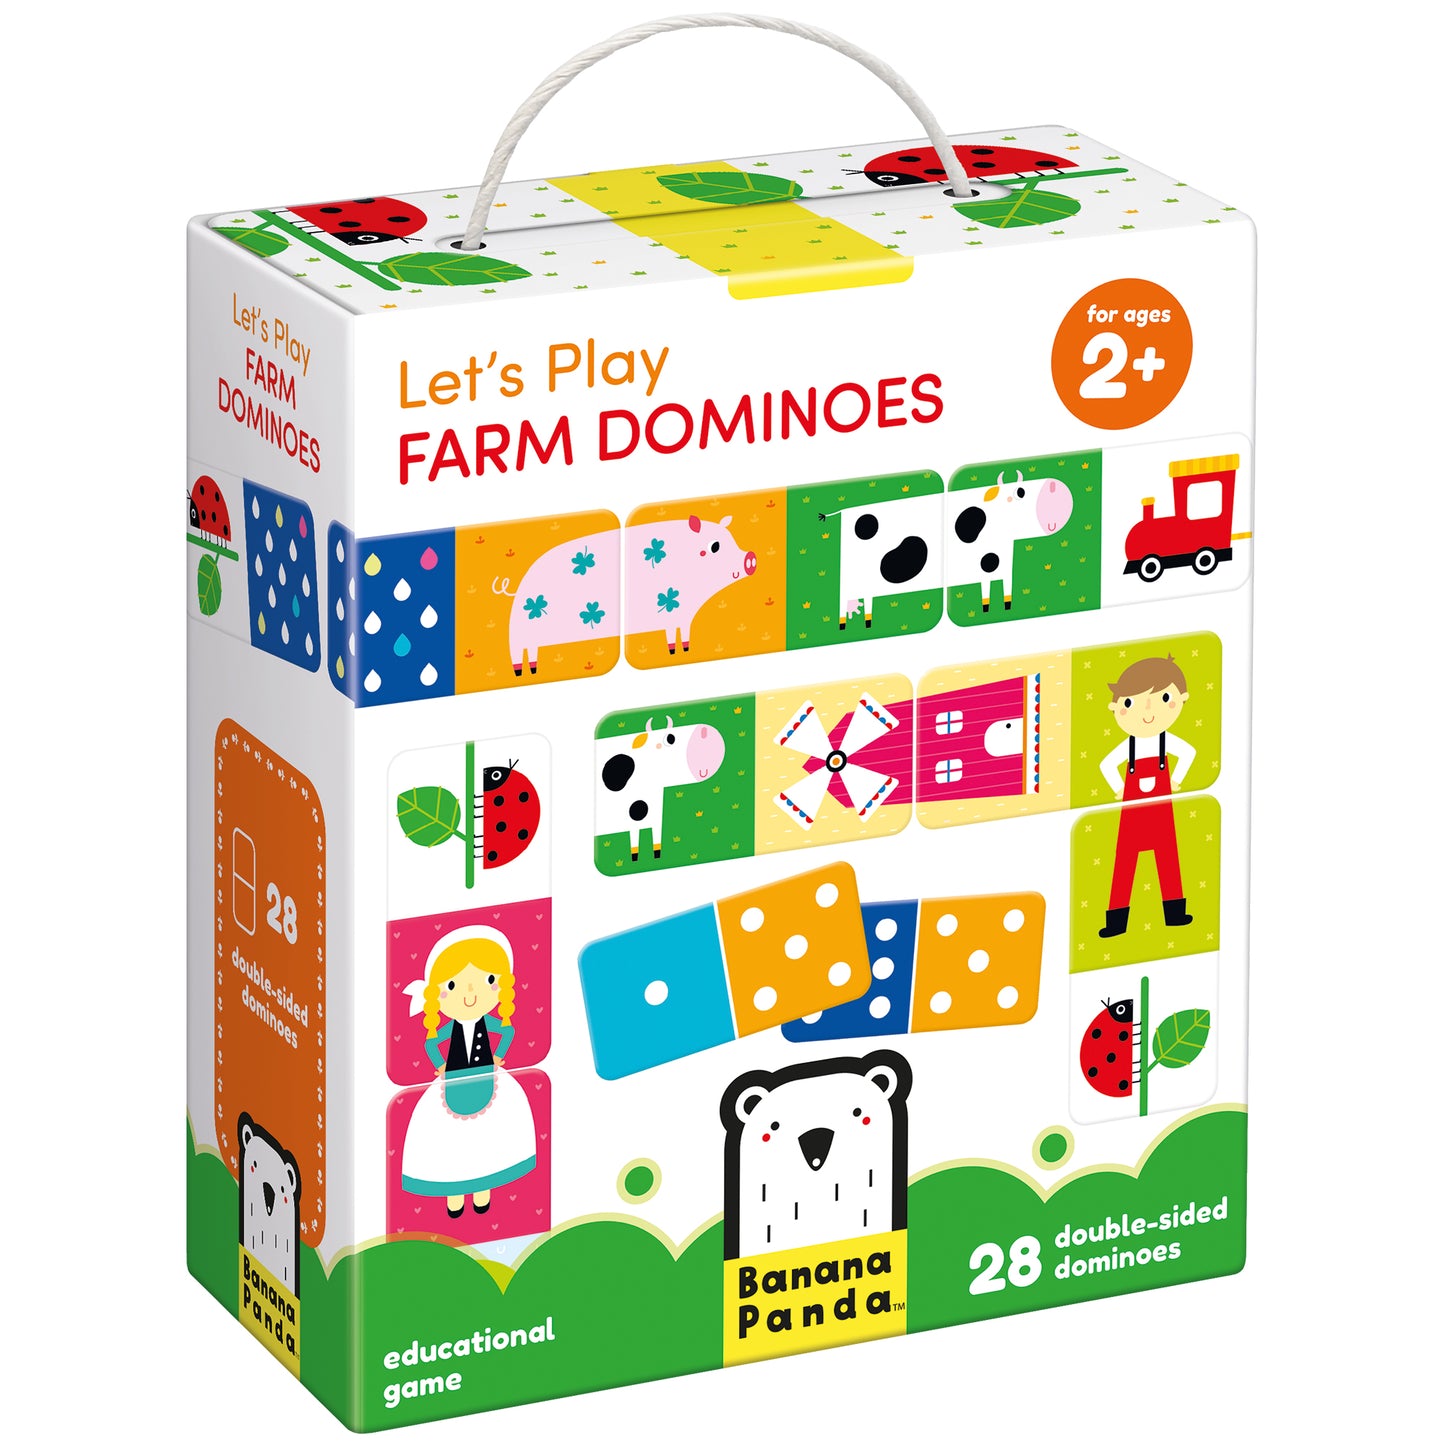 Let’s play Farm Dominoes